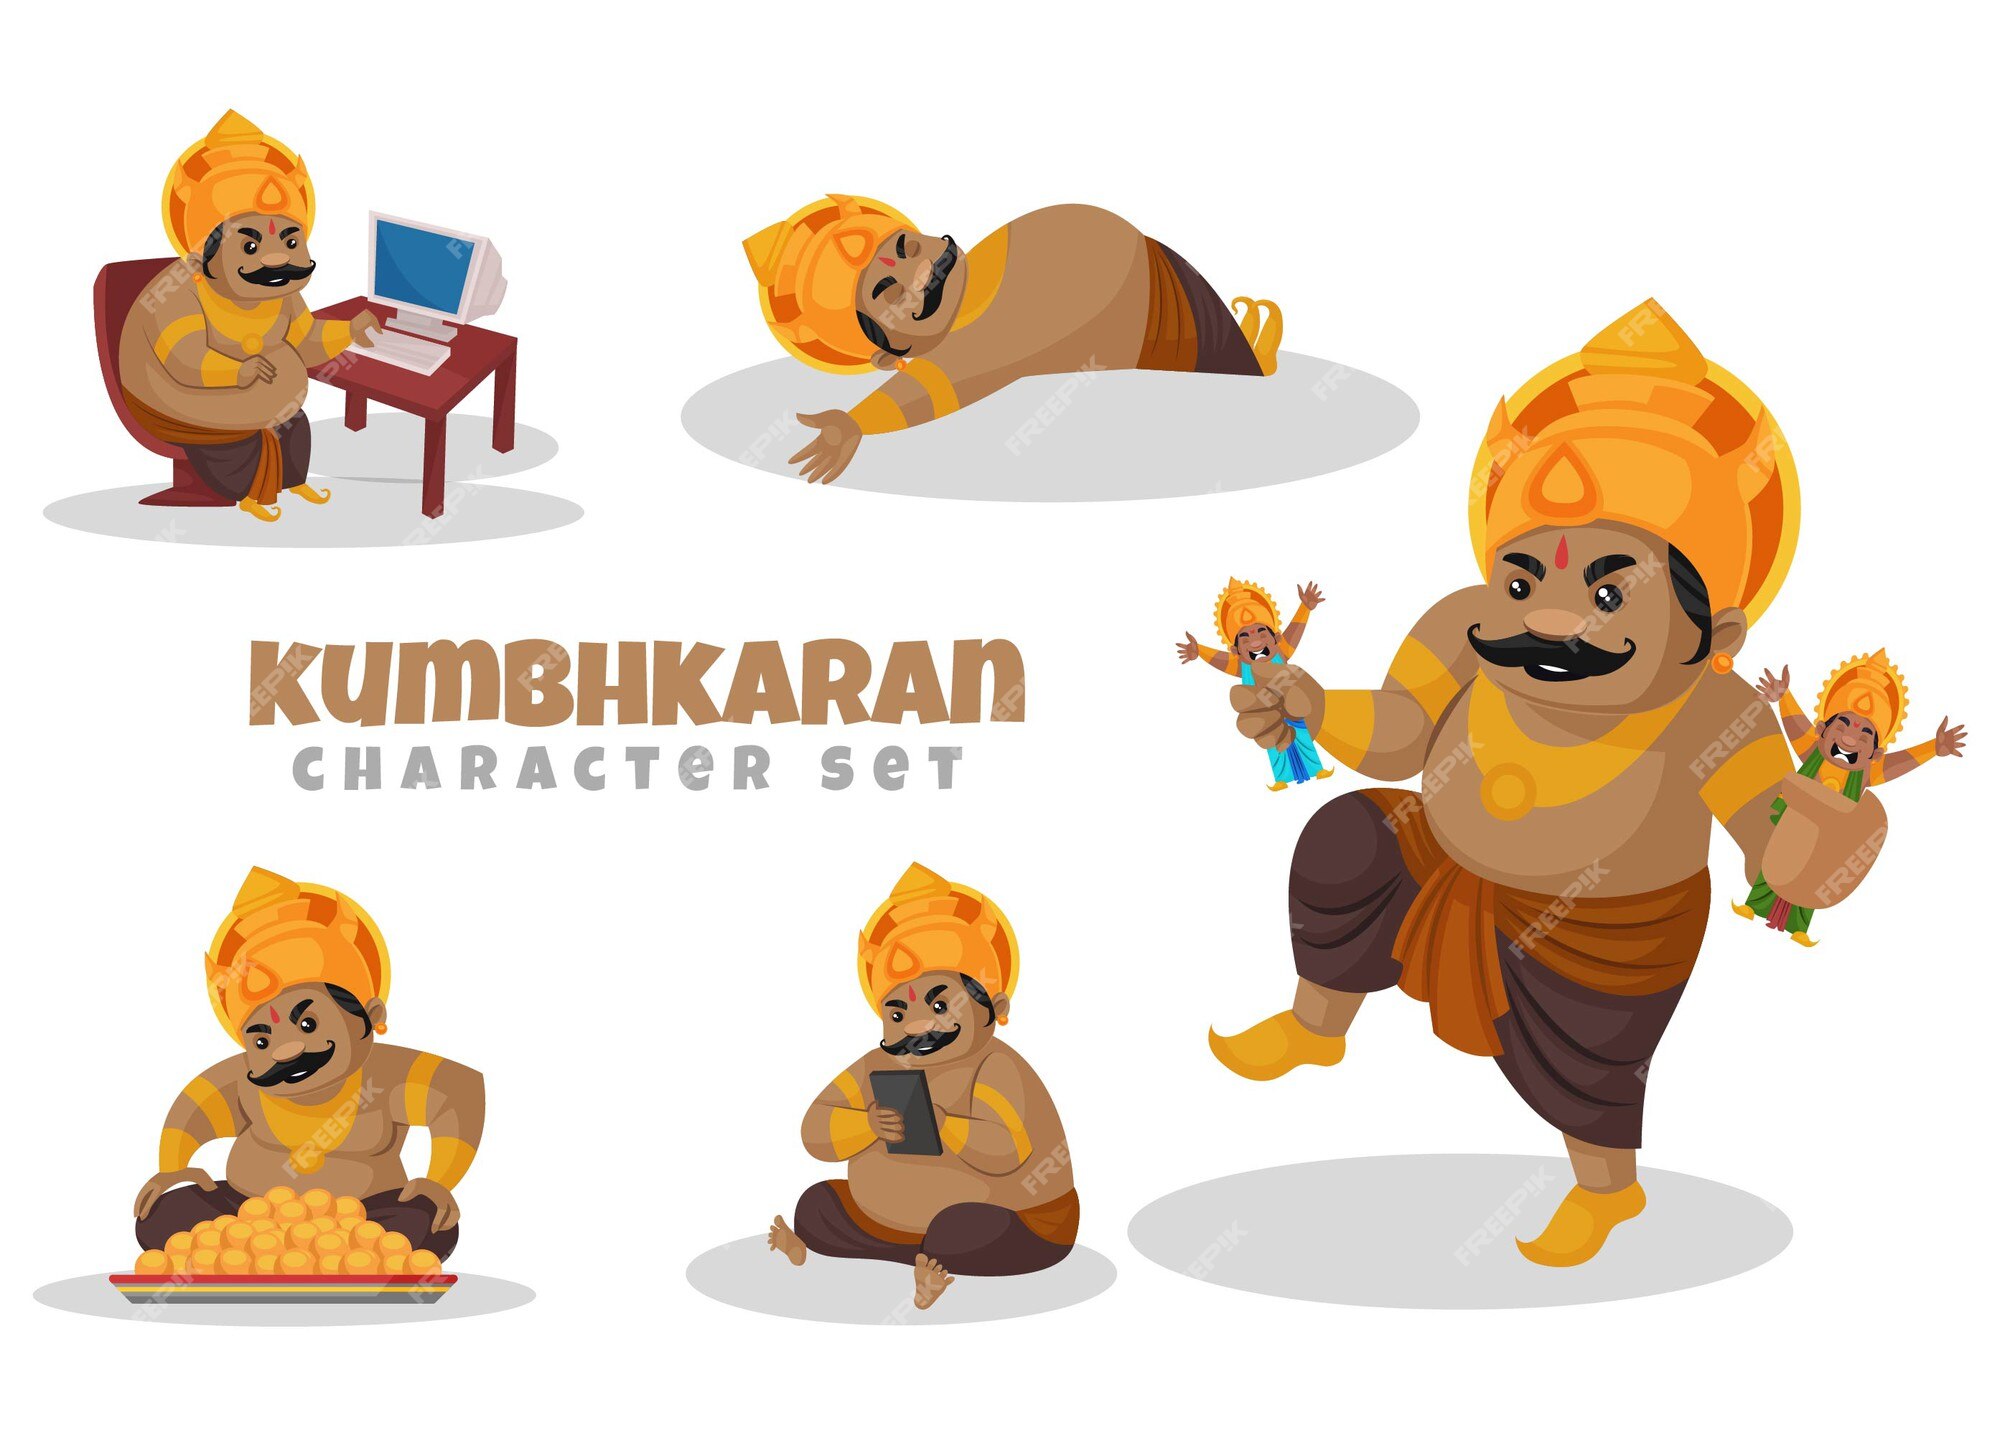 Premium Vector | Cartoon illustration of kumbhkaran character set